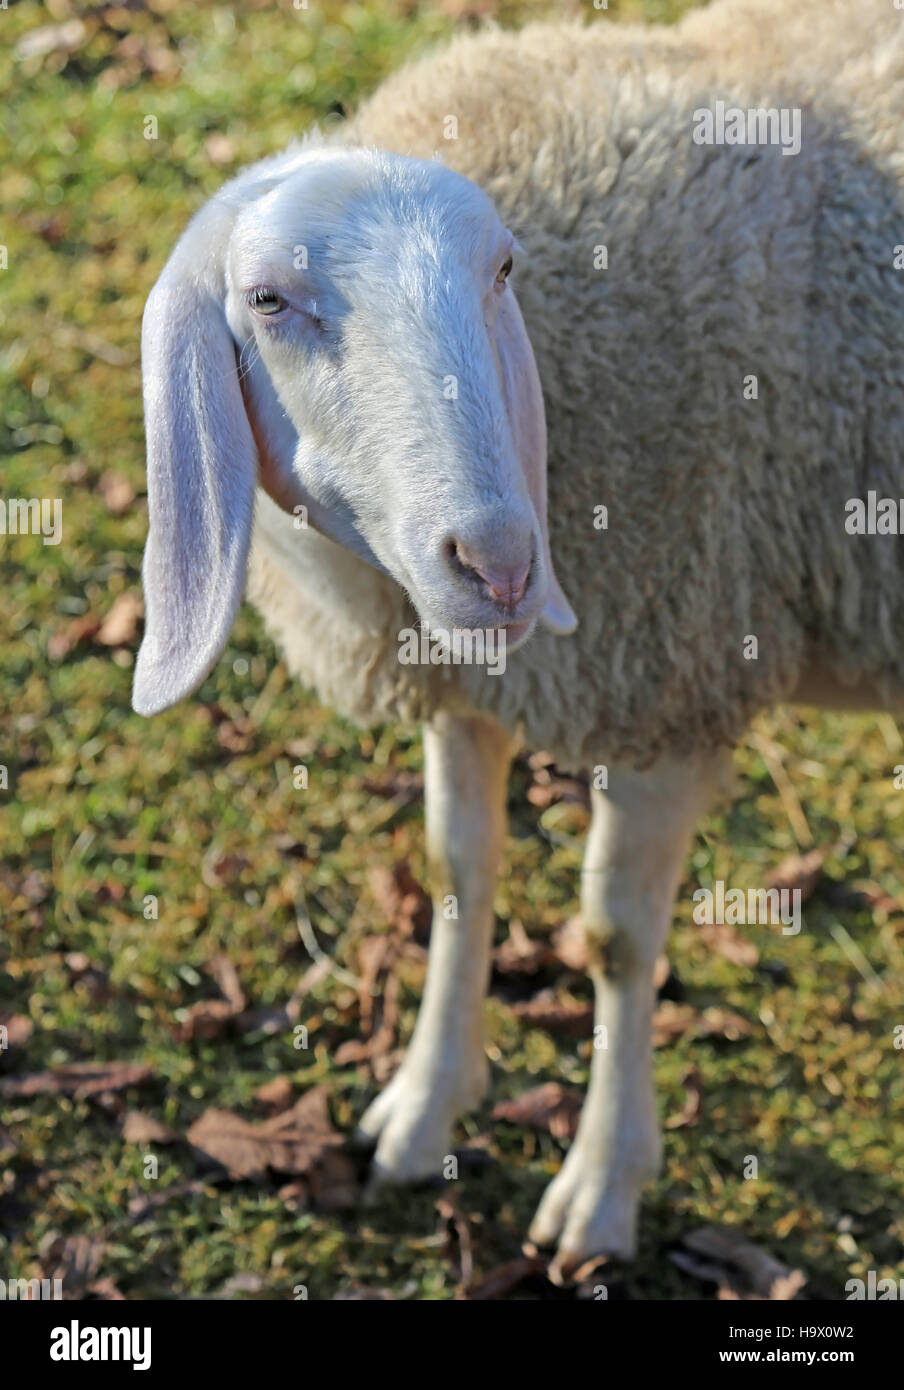 sheep with long ears and woolly fleece Stock Photo